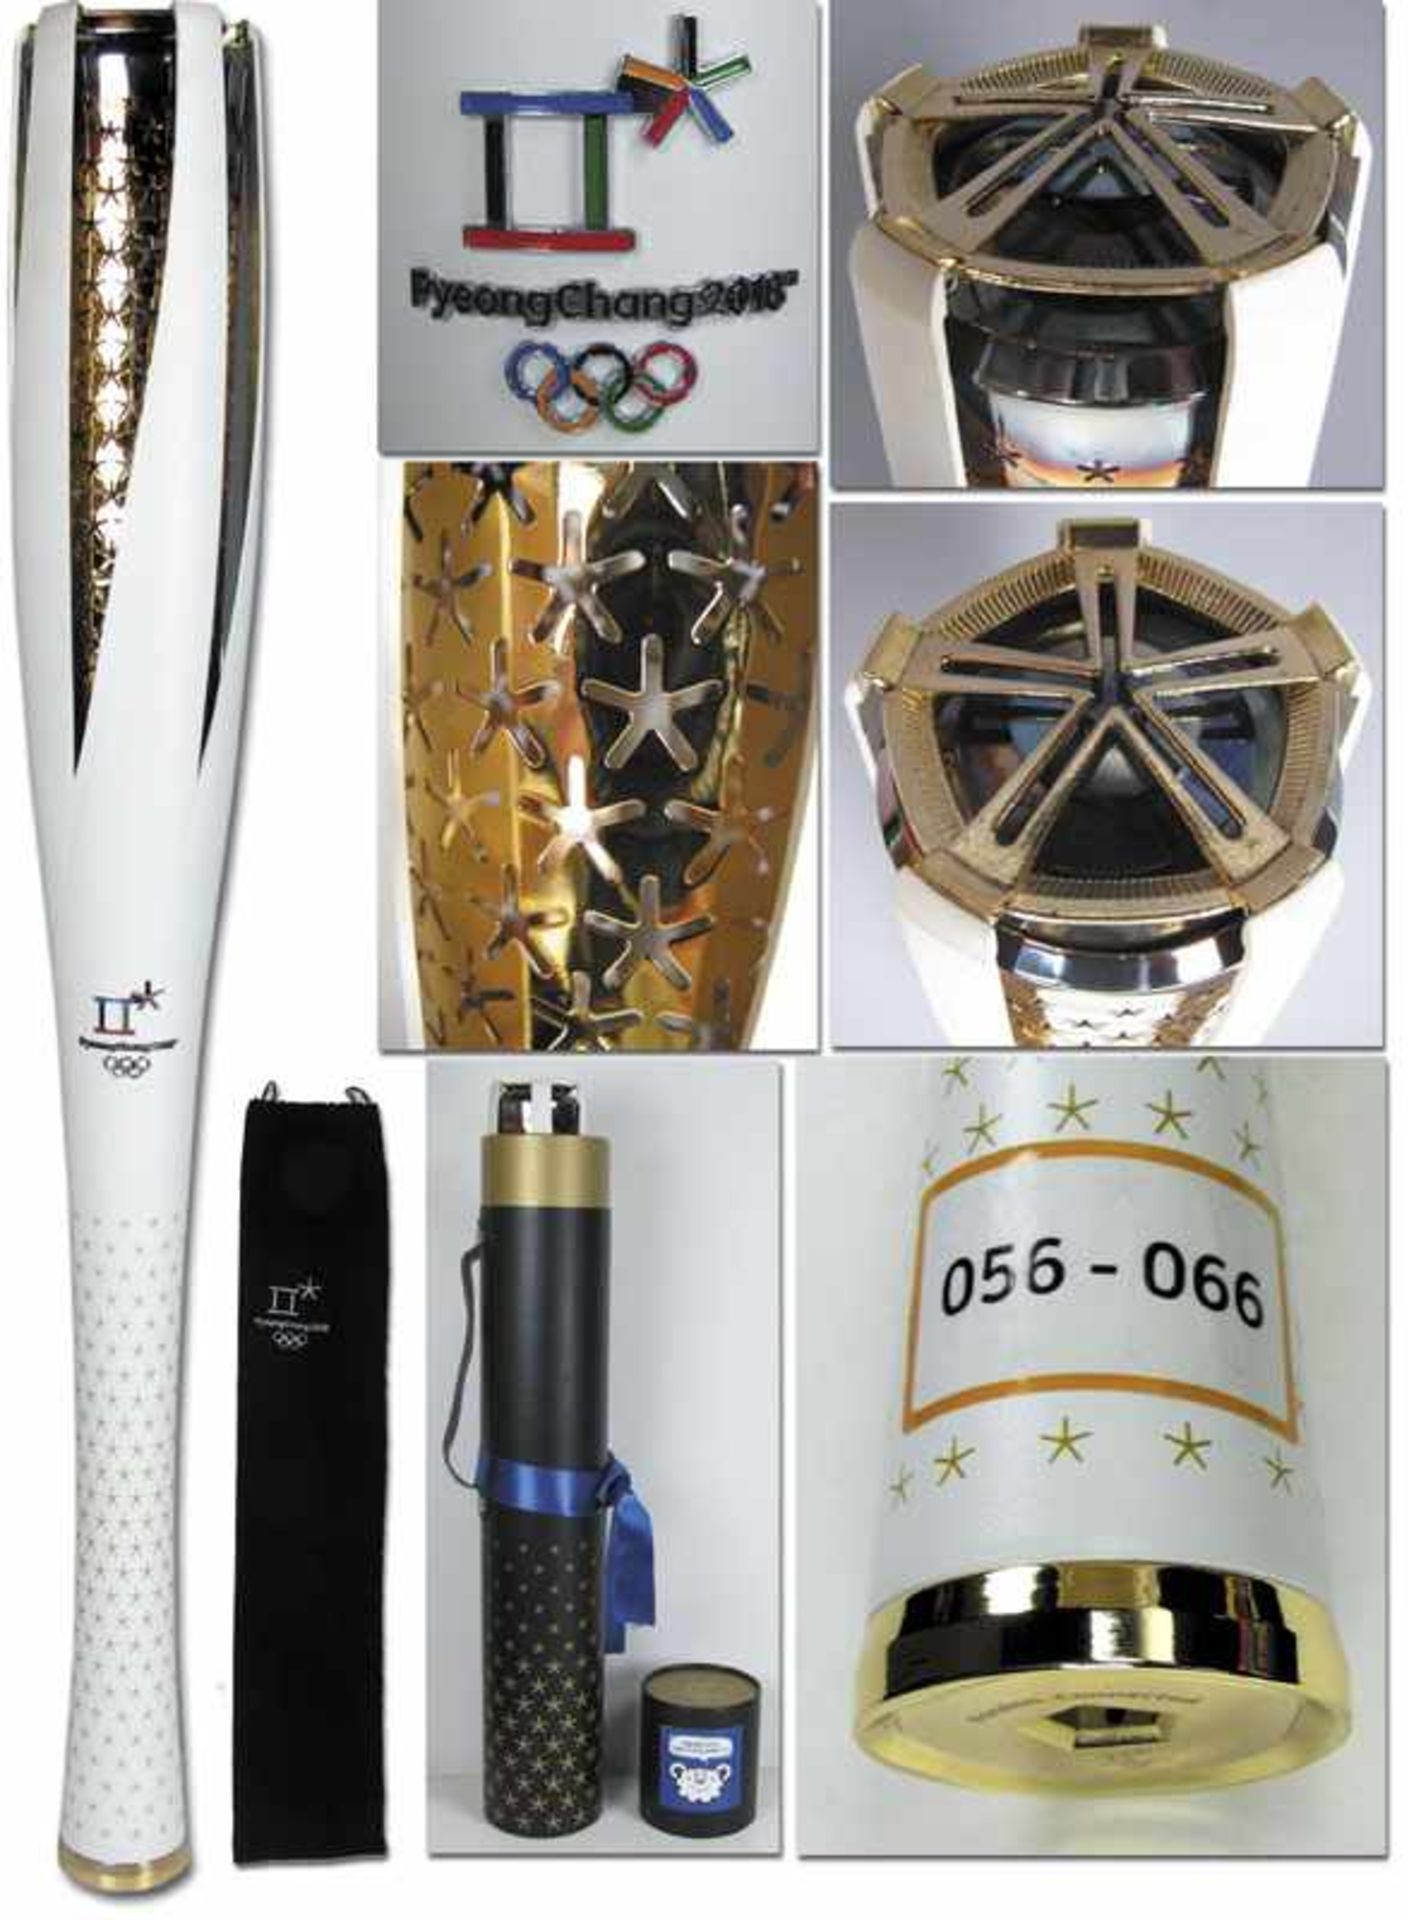 Olympic Winter Games 2018 originla Torch - Original Olympic torch from the Olympic Games in